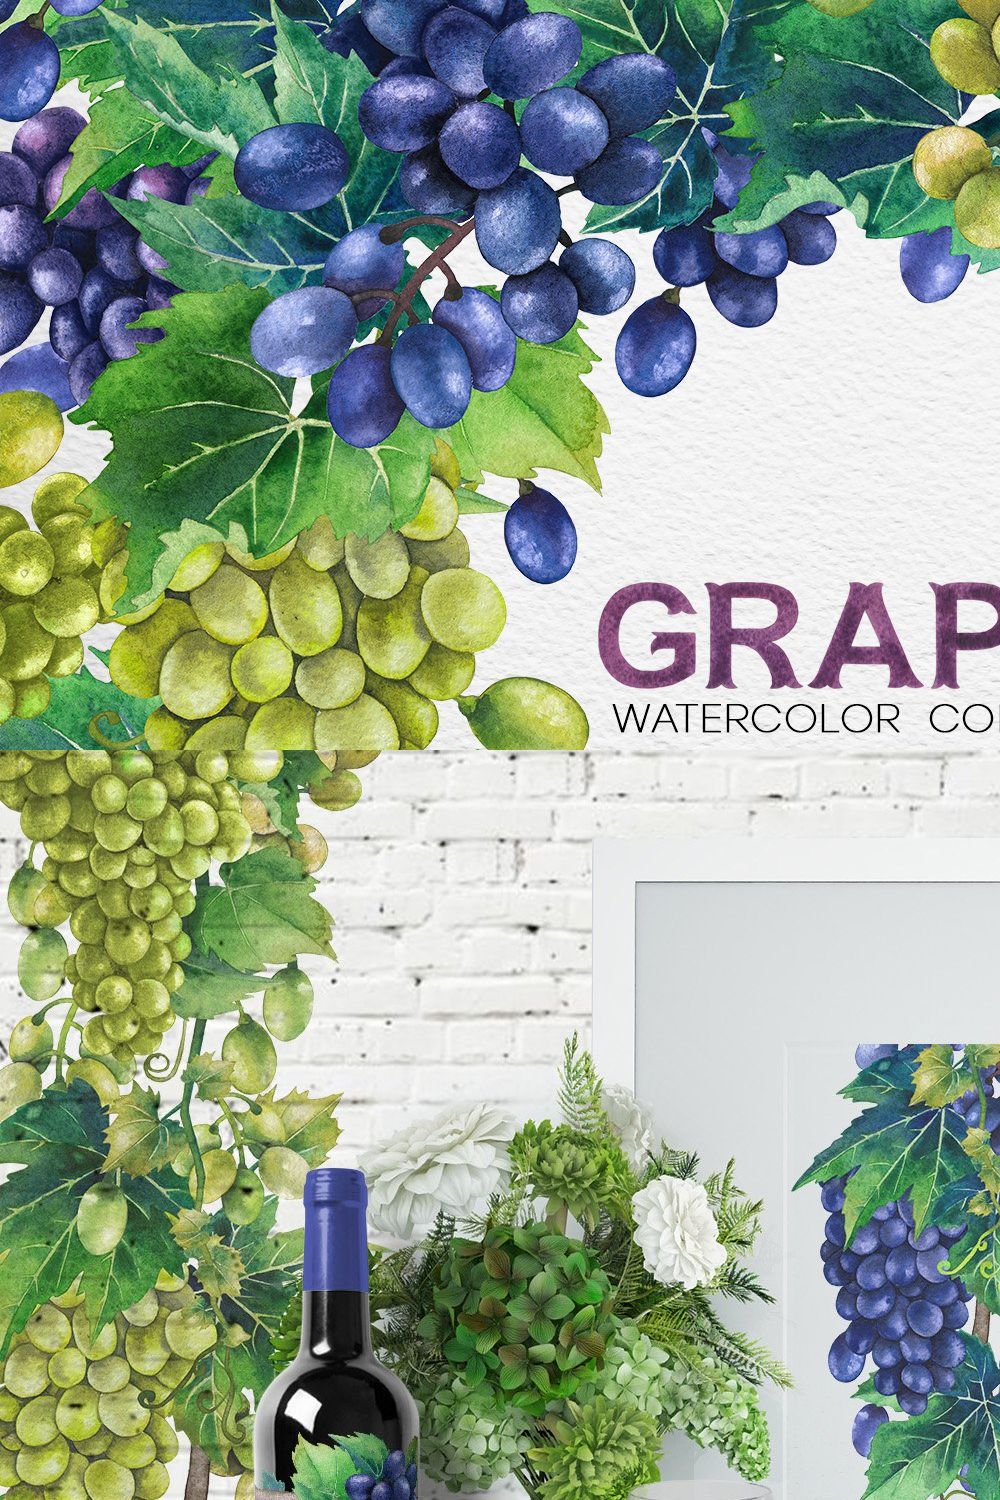 Watercolor Grapes pinterest preview image.